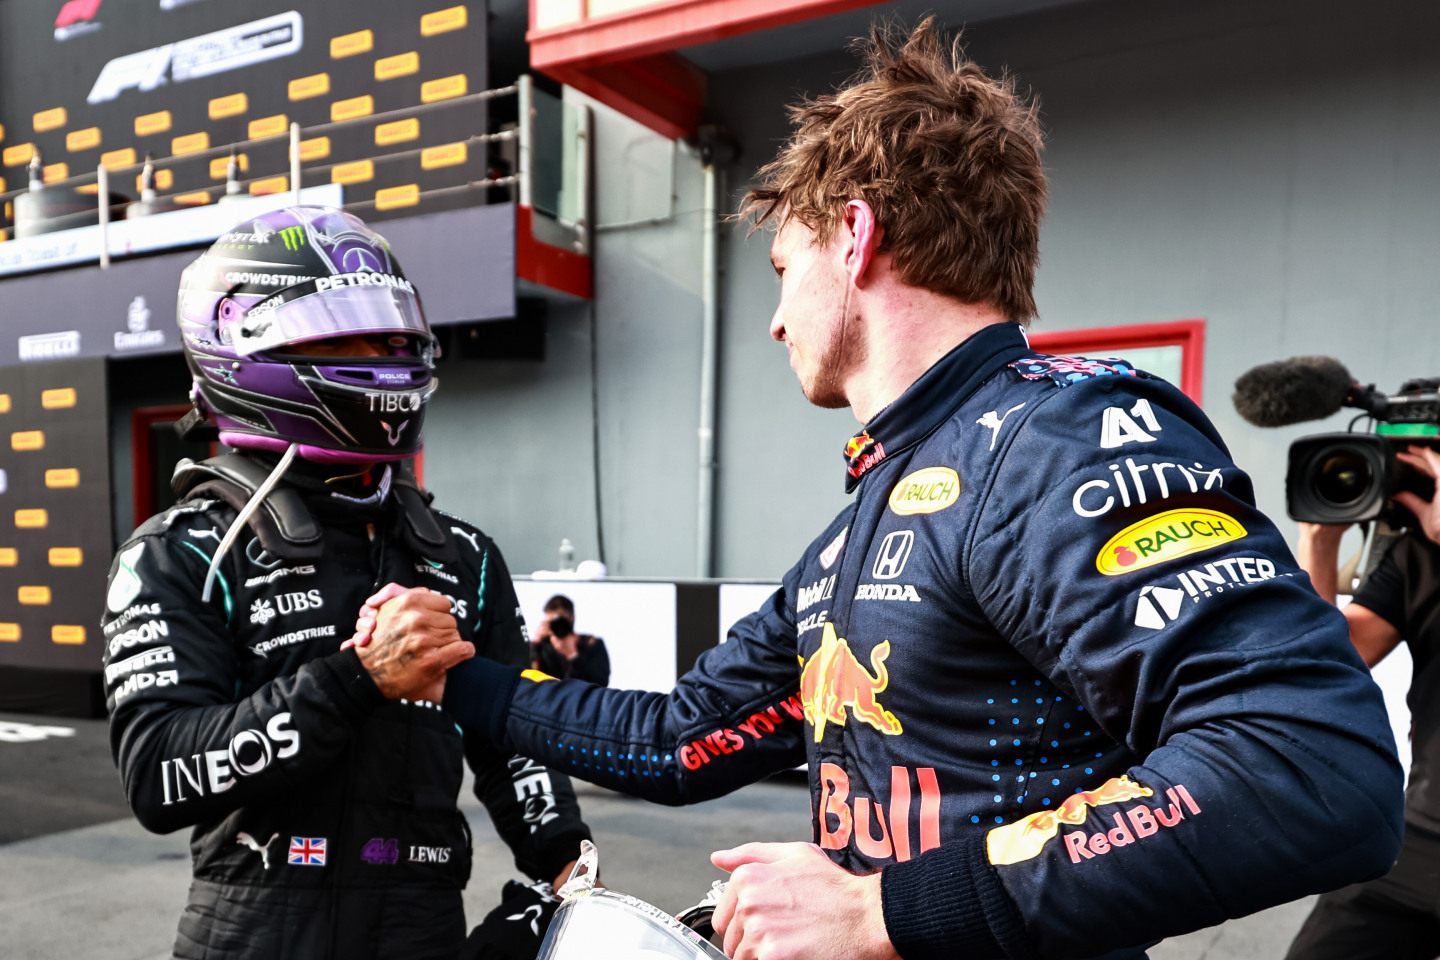 Льюис Хэмилтон и Макс Ферстаппен вместе в Red Bull Racing? Нереально! © Red Content Pool